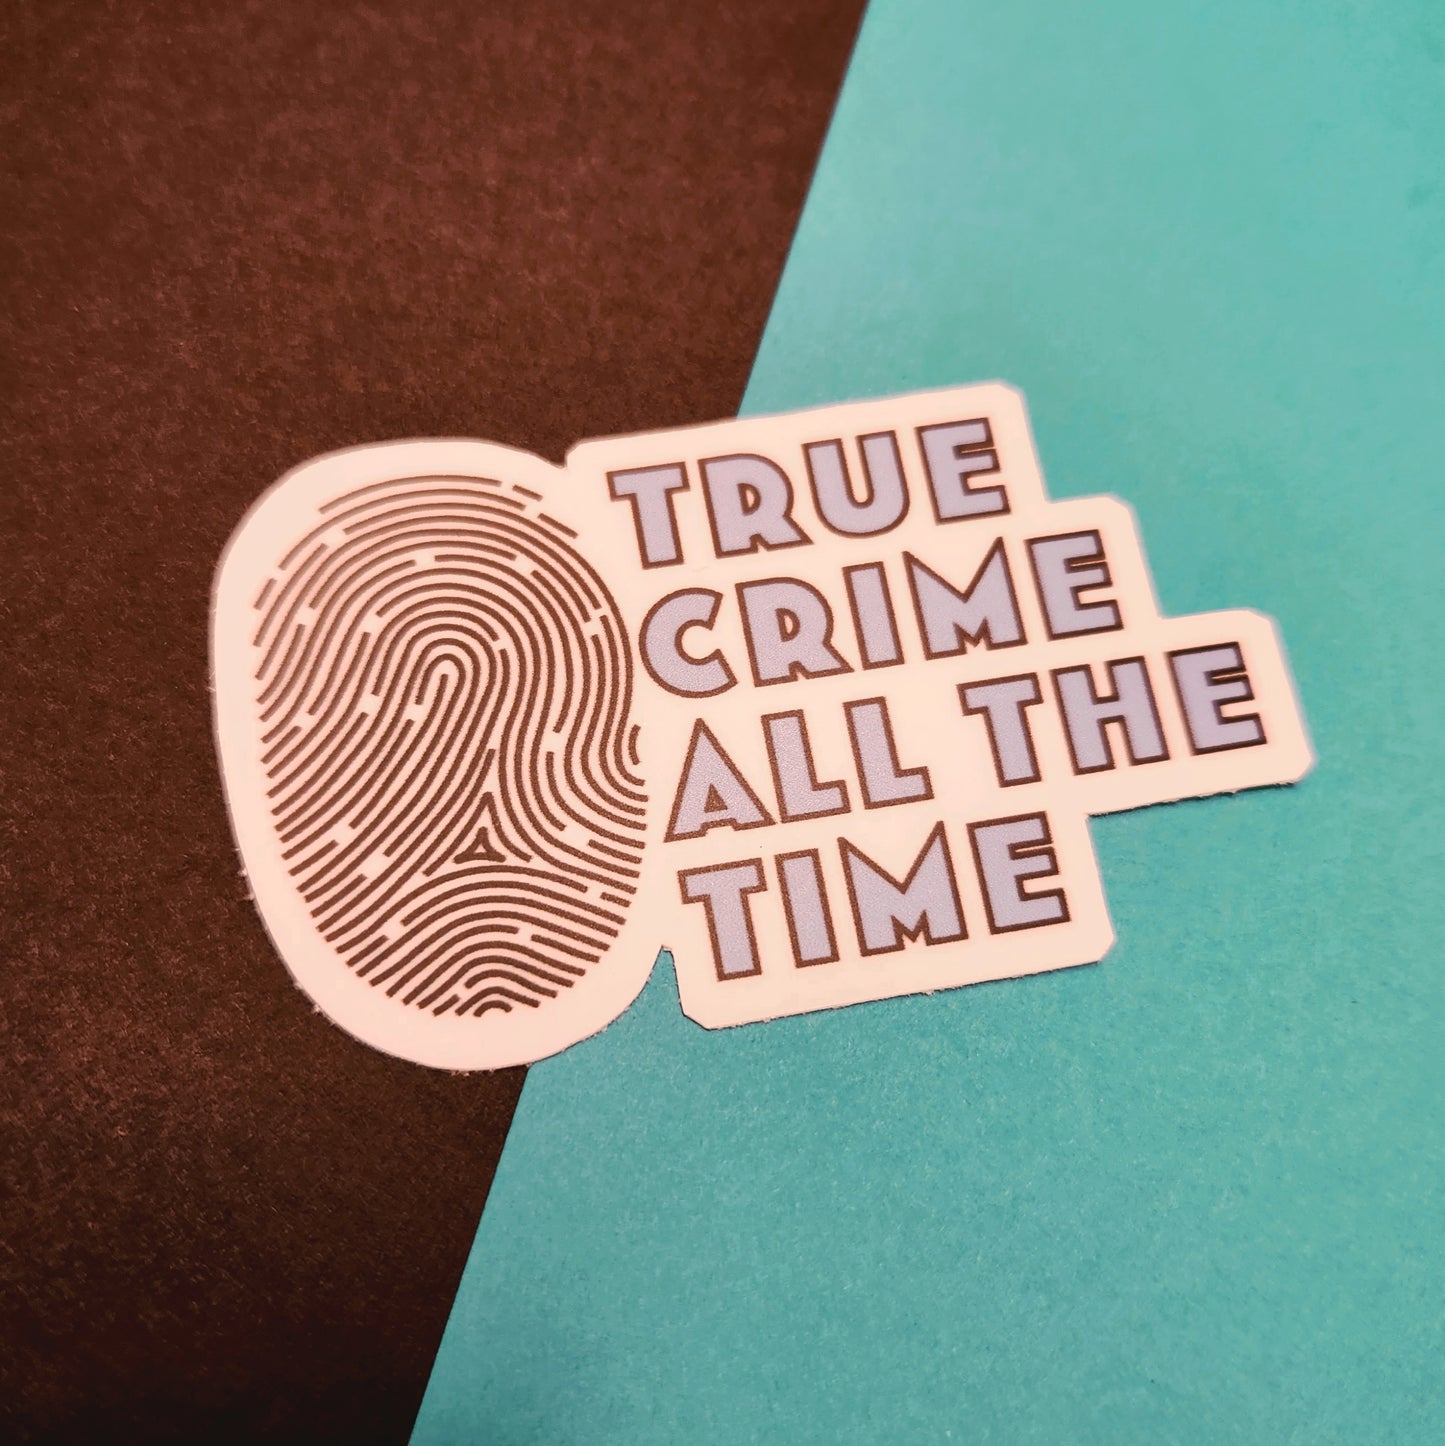 True Crime All The Time Sticker